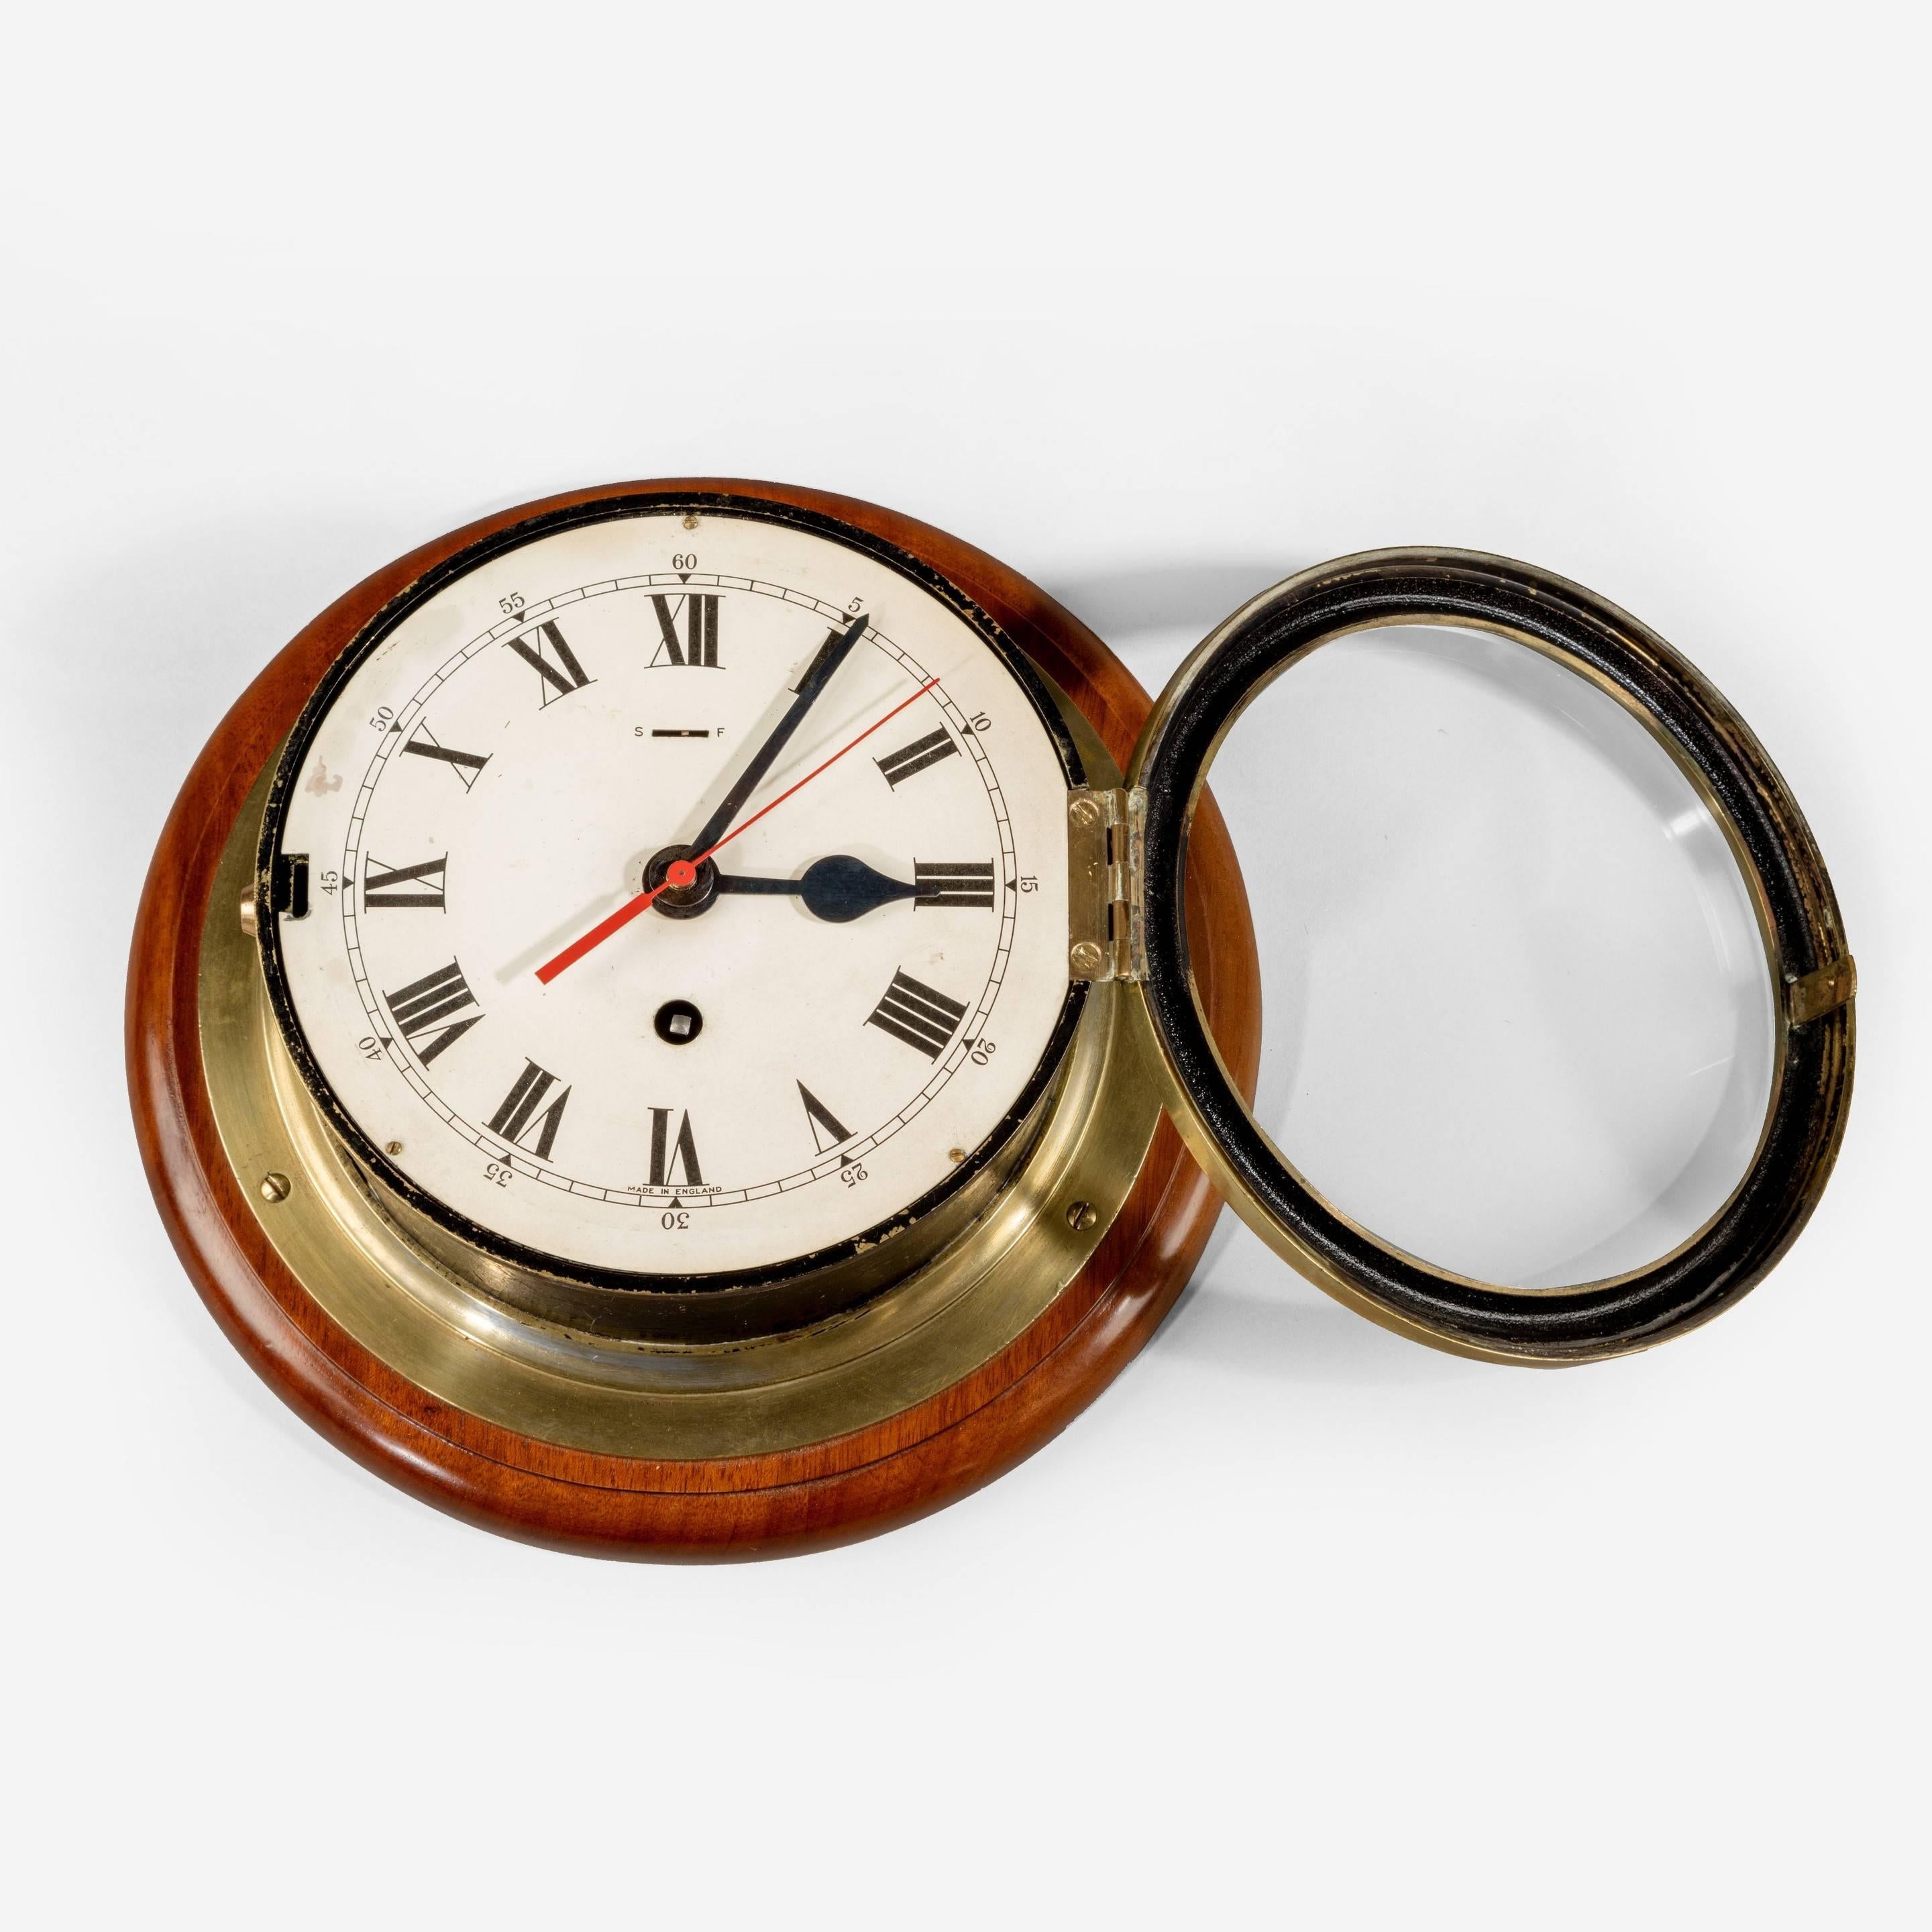 6 ½“ dial Smith’s Astral ship’s bulkhead clock with brass bezel and black body on a mahogany back-board.